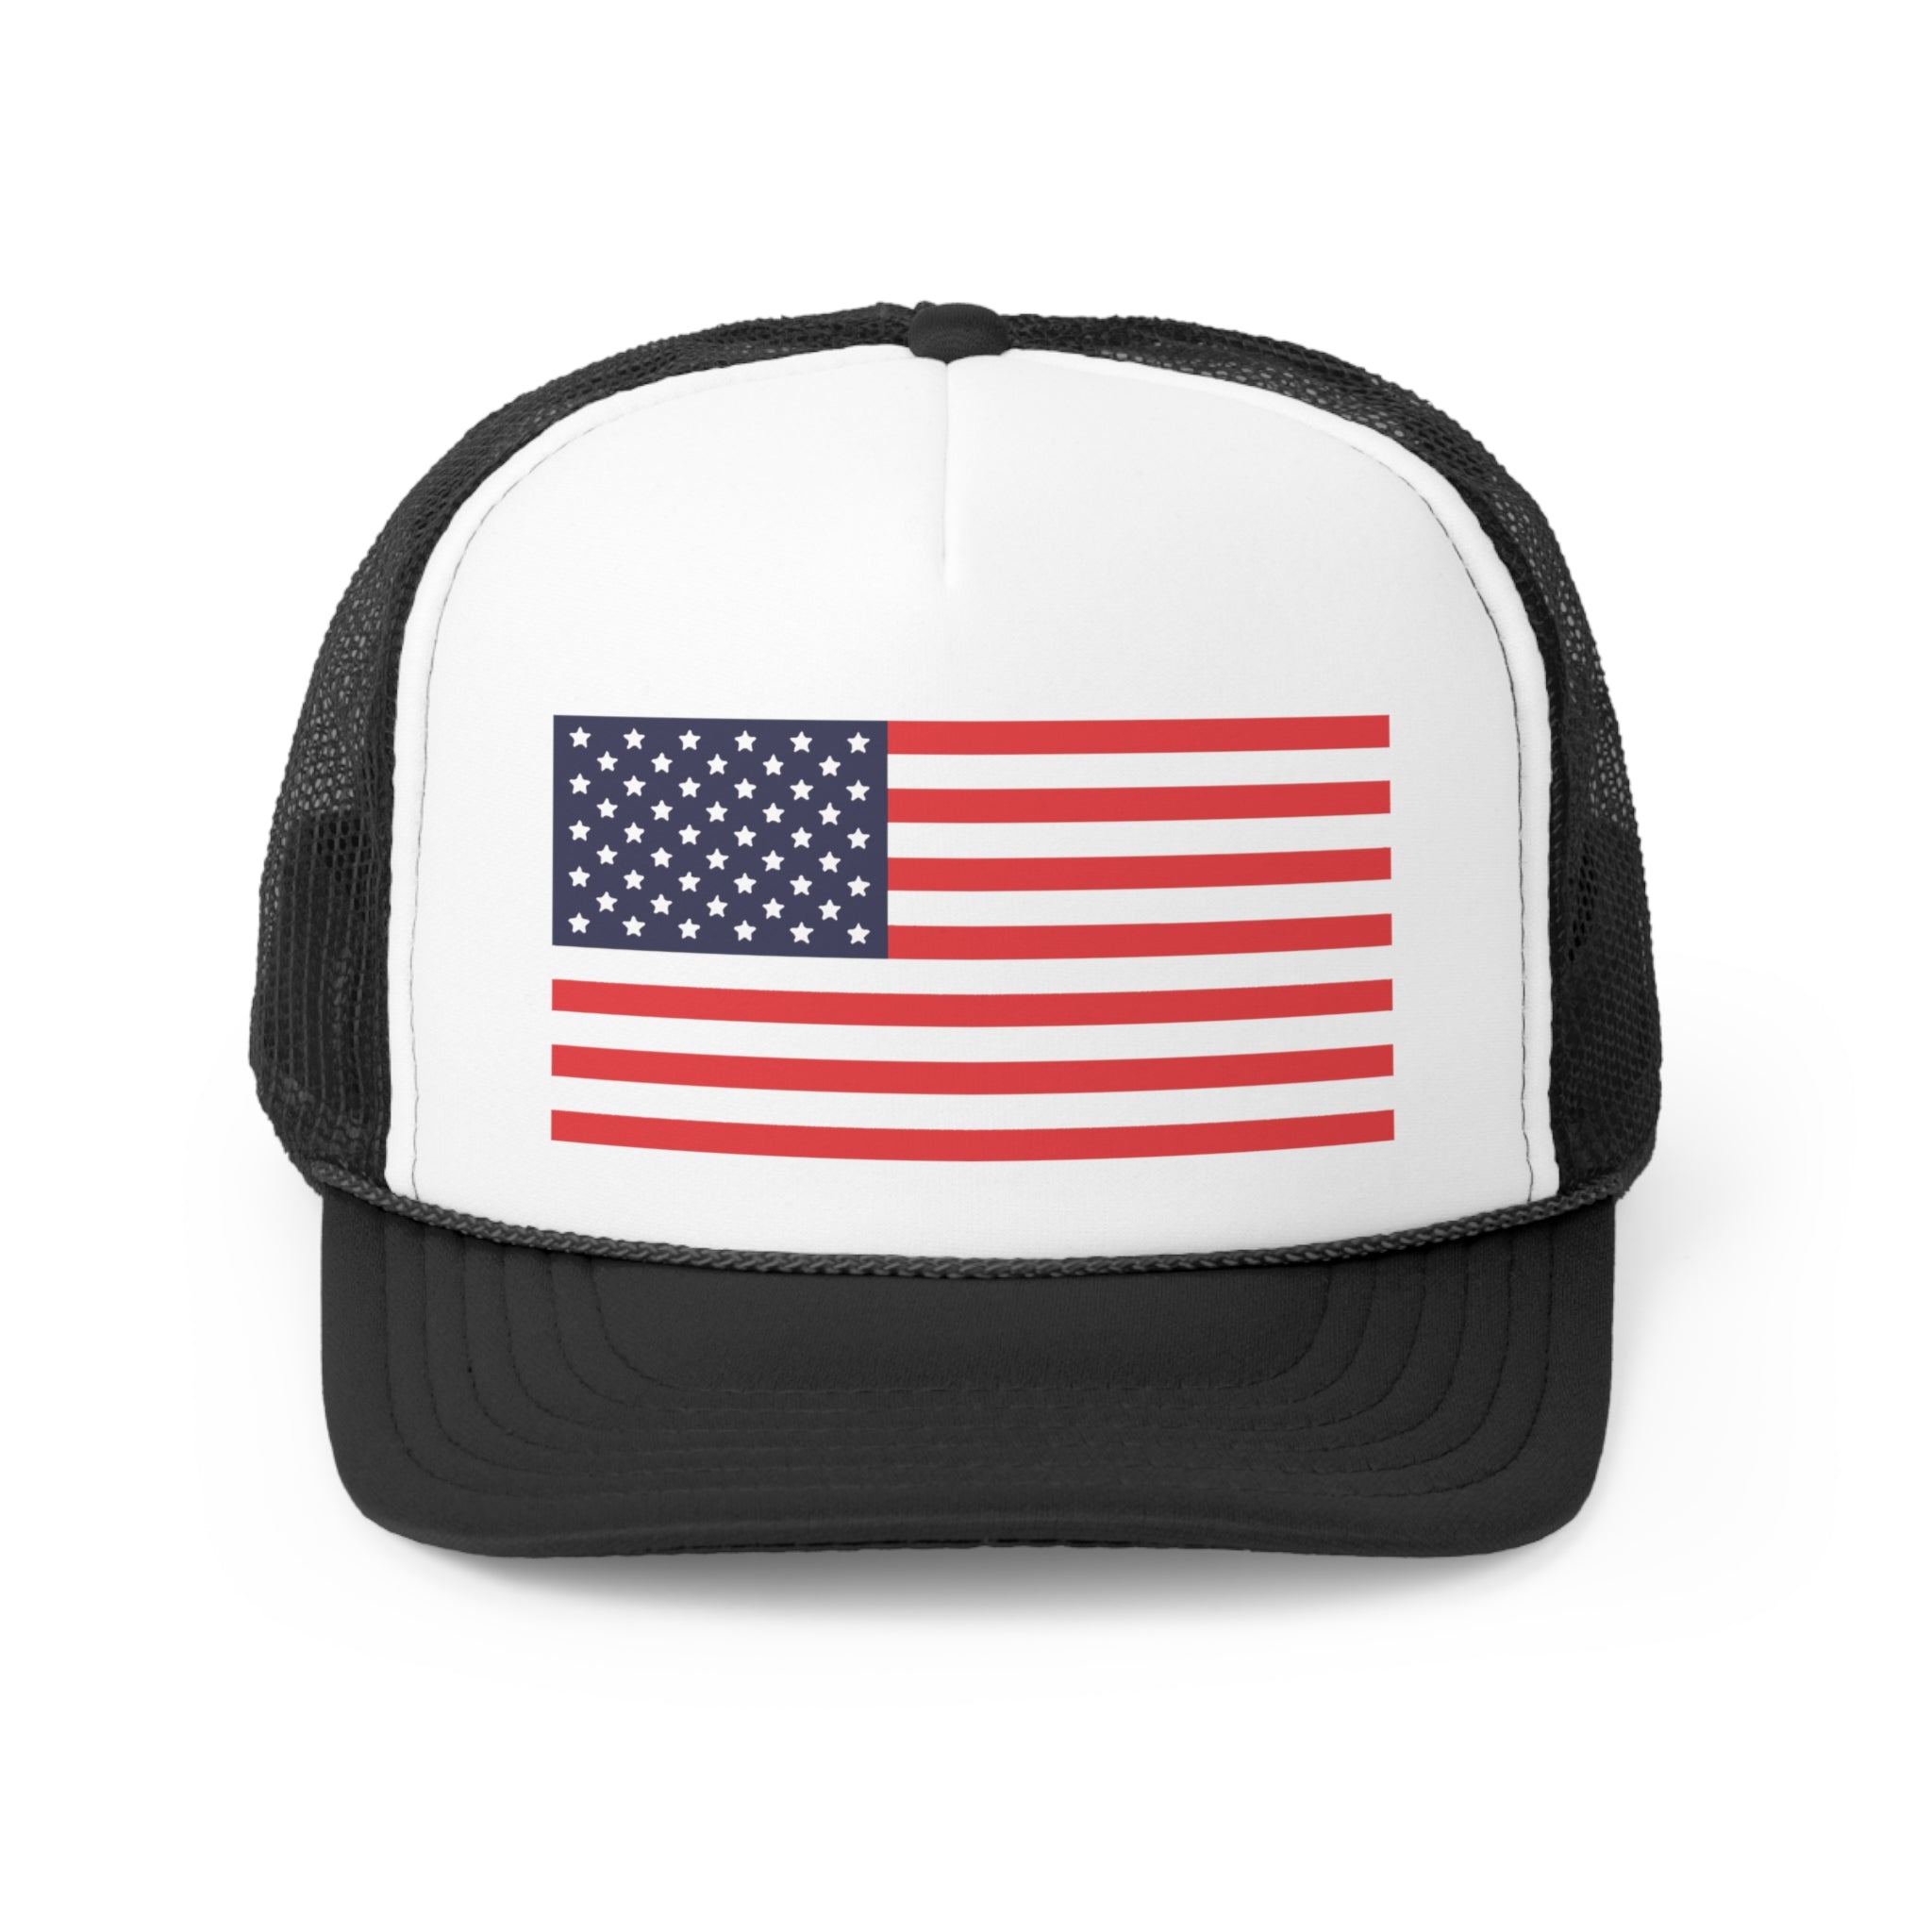 U.S. Trucker Cap